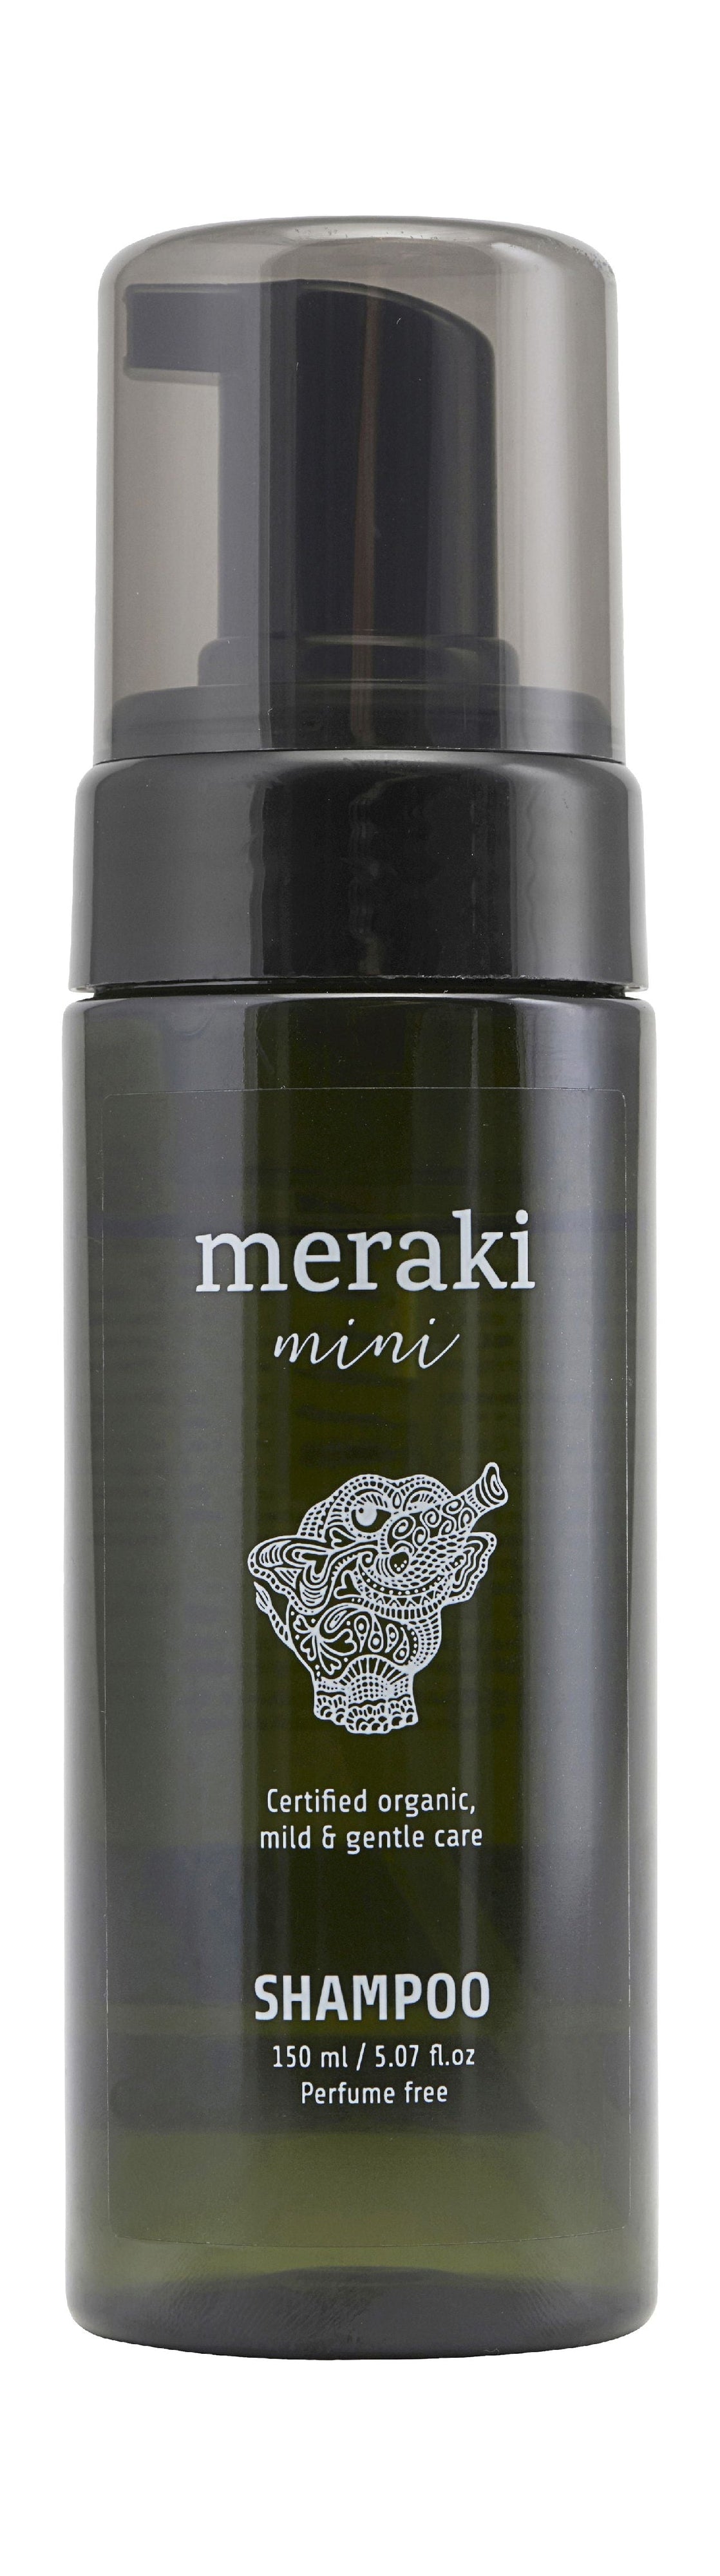 Meraki Shampoo 150 ml